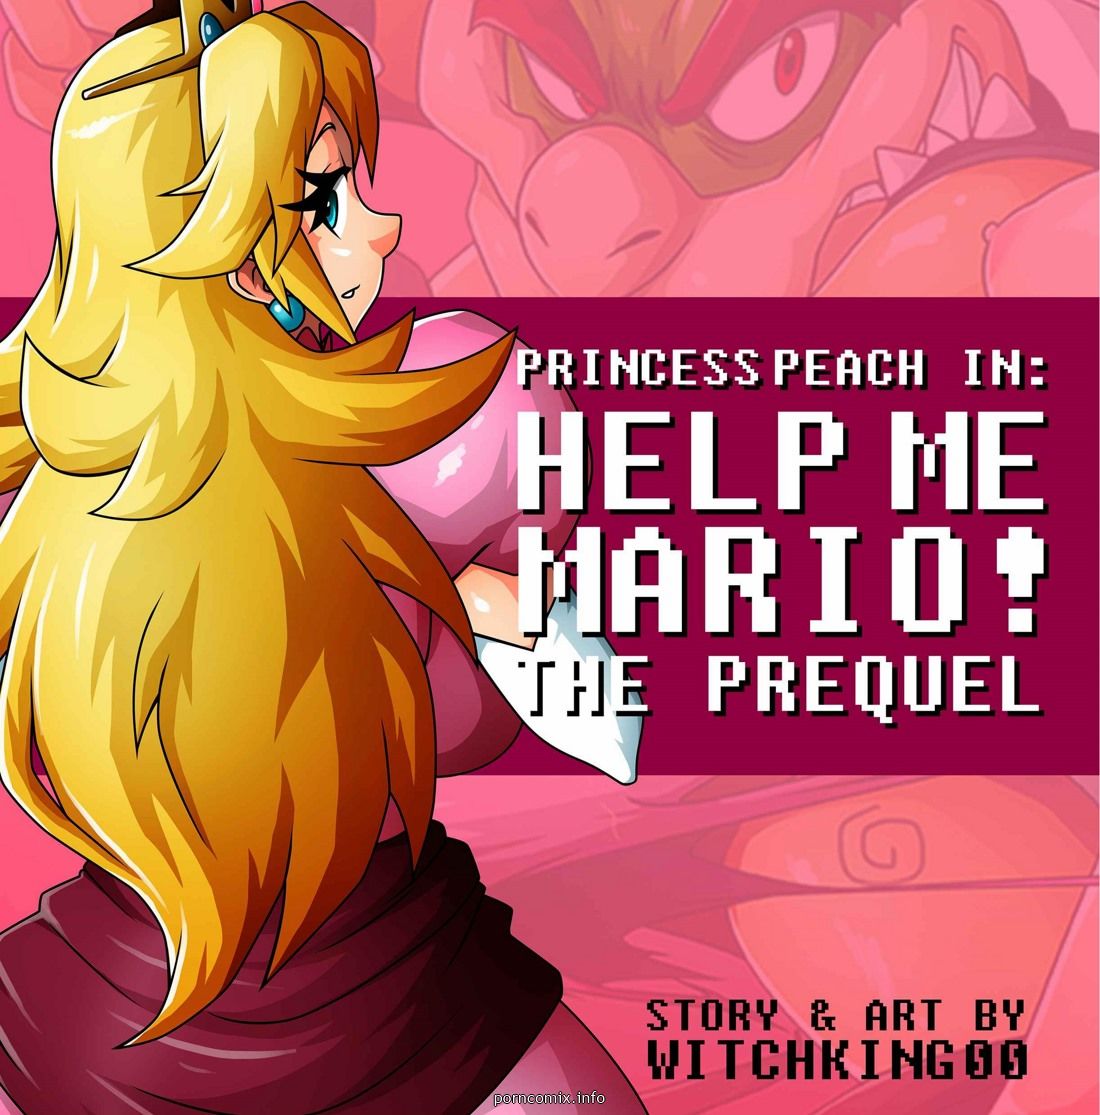 Witchking00 - Princess Peach - Help Me Mario! page 1